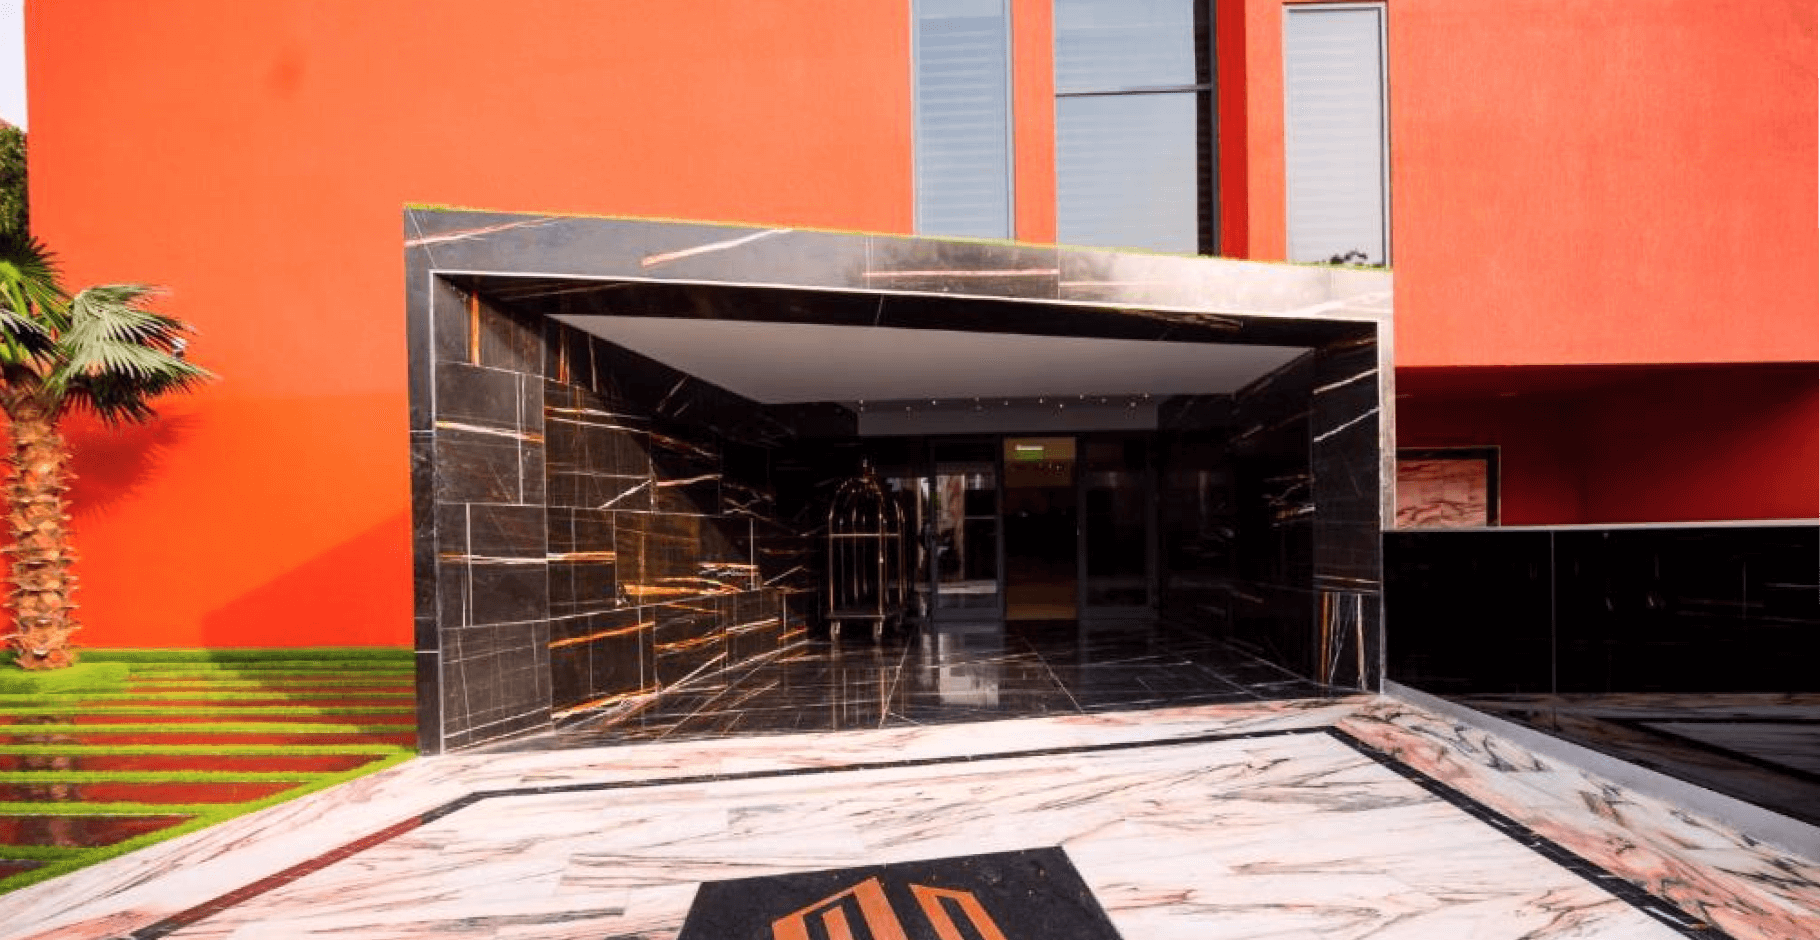 Bel Air Crest Building – Accra